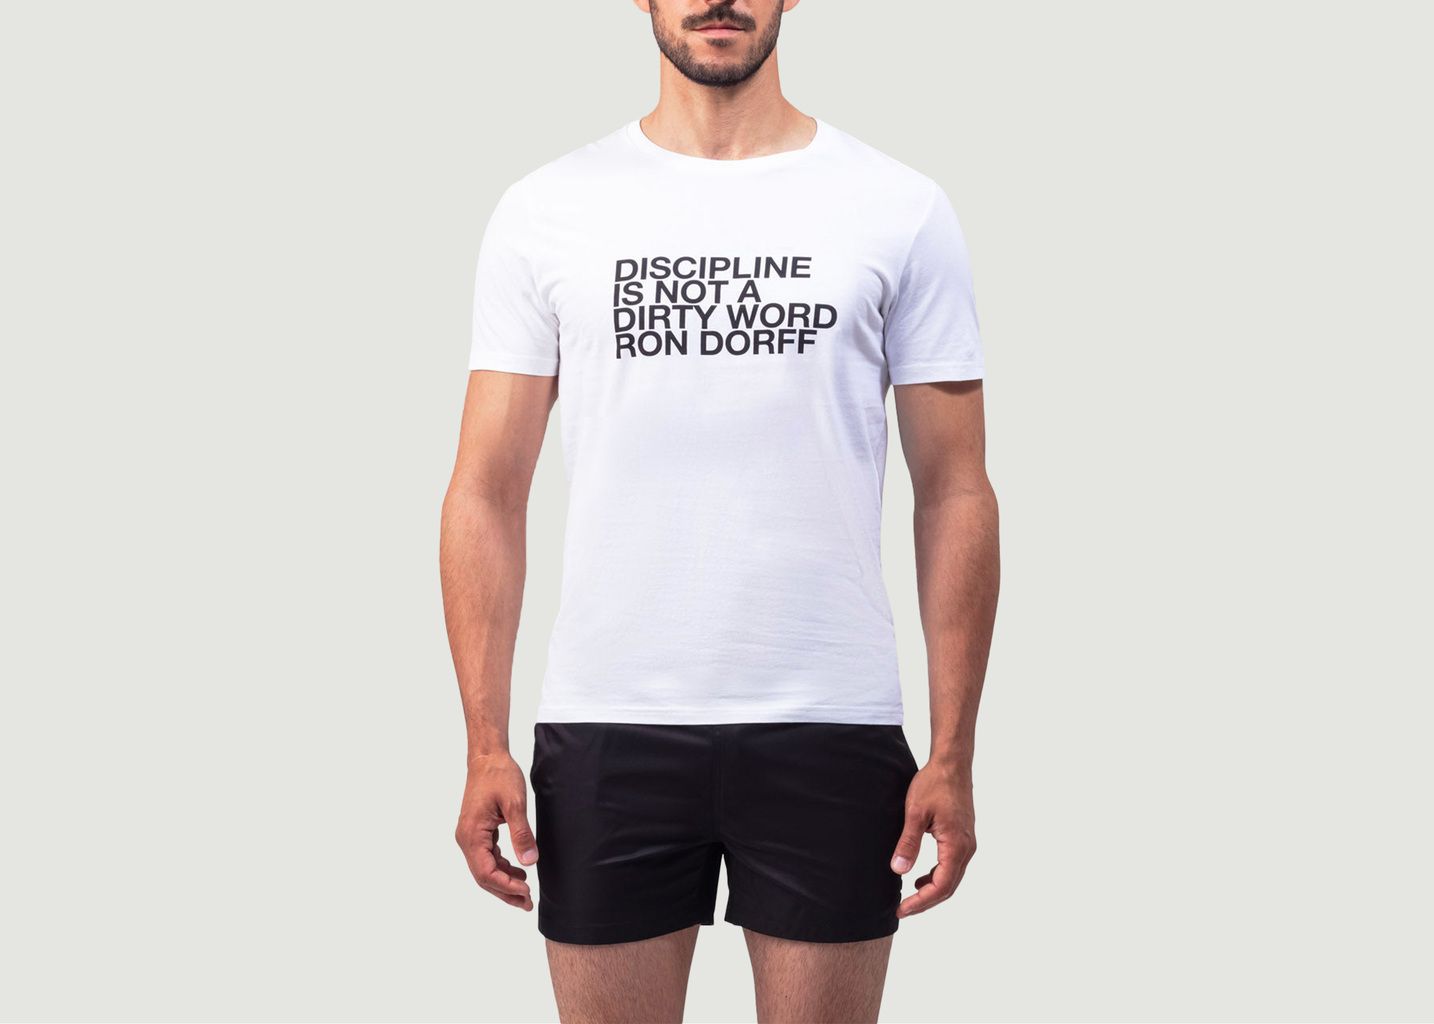 Ron Dorff T-shirt Discipline